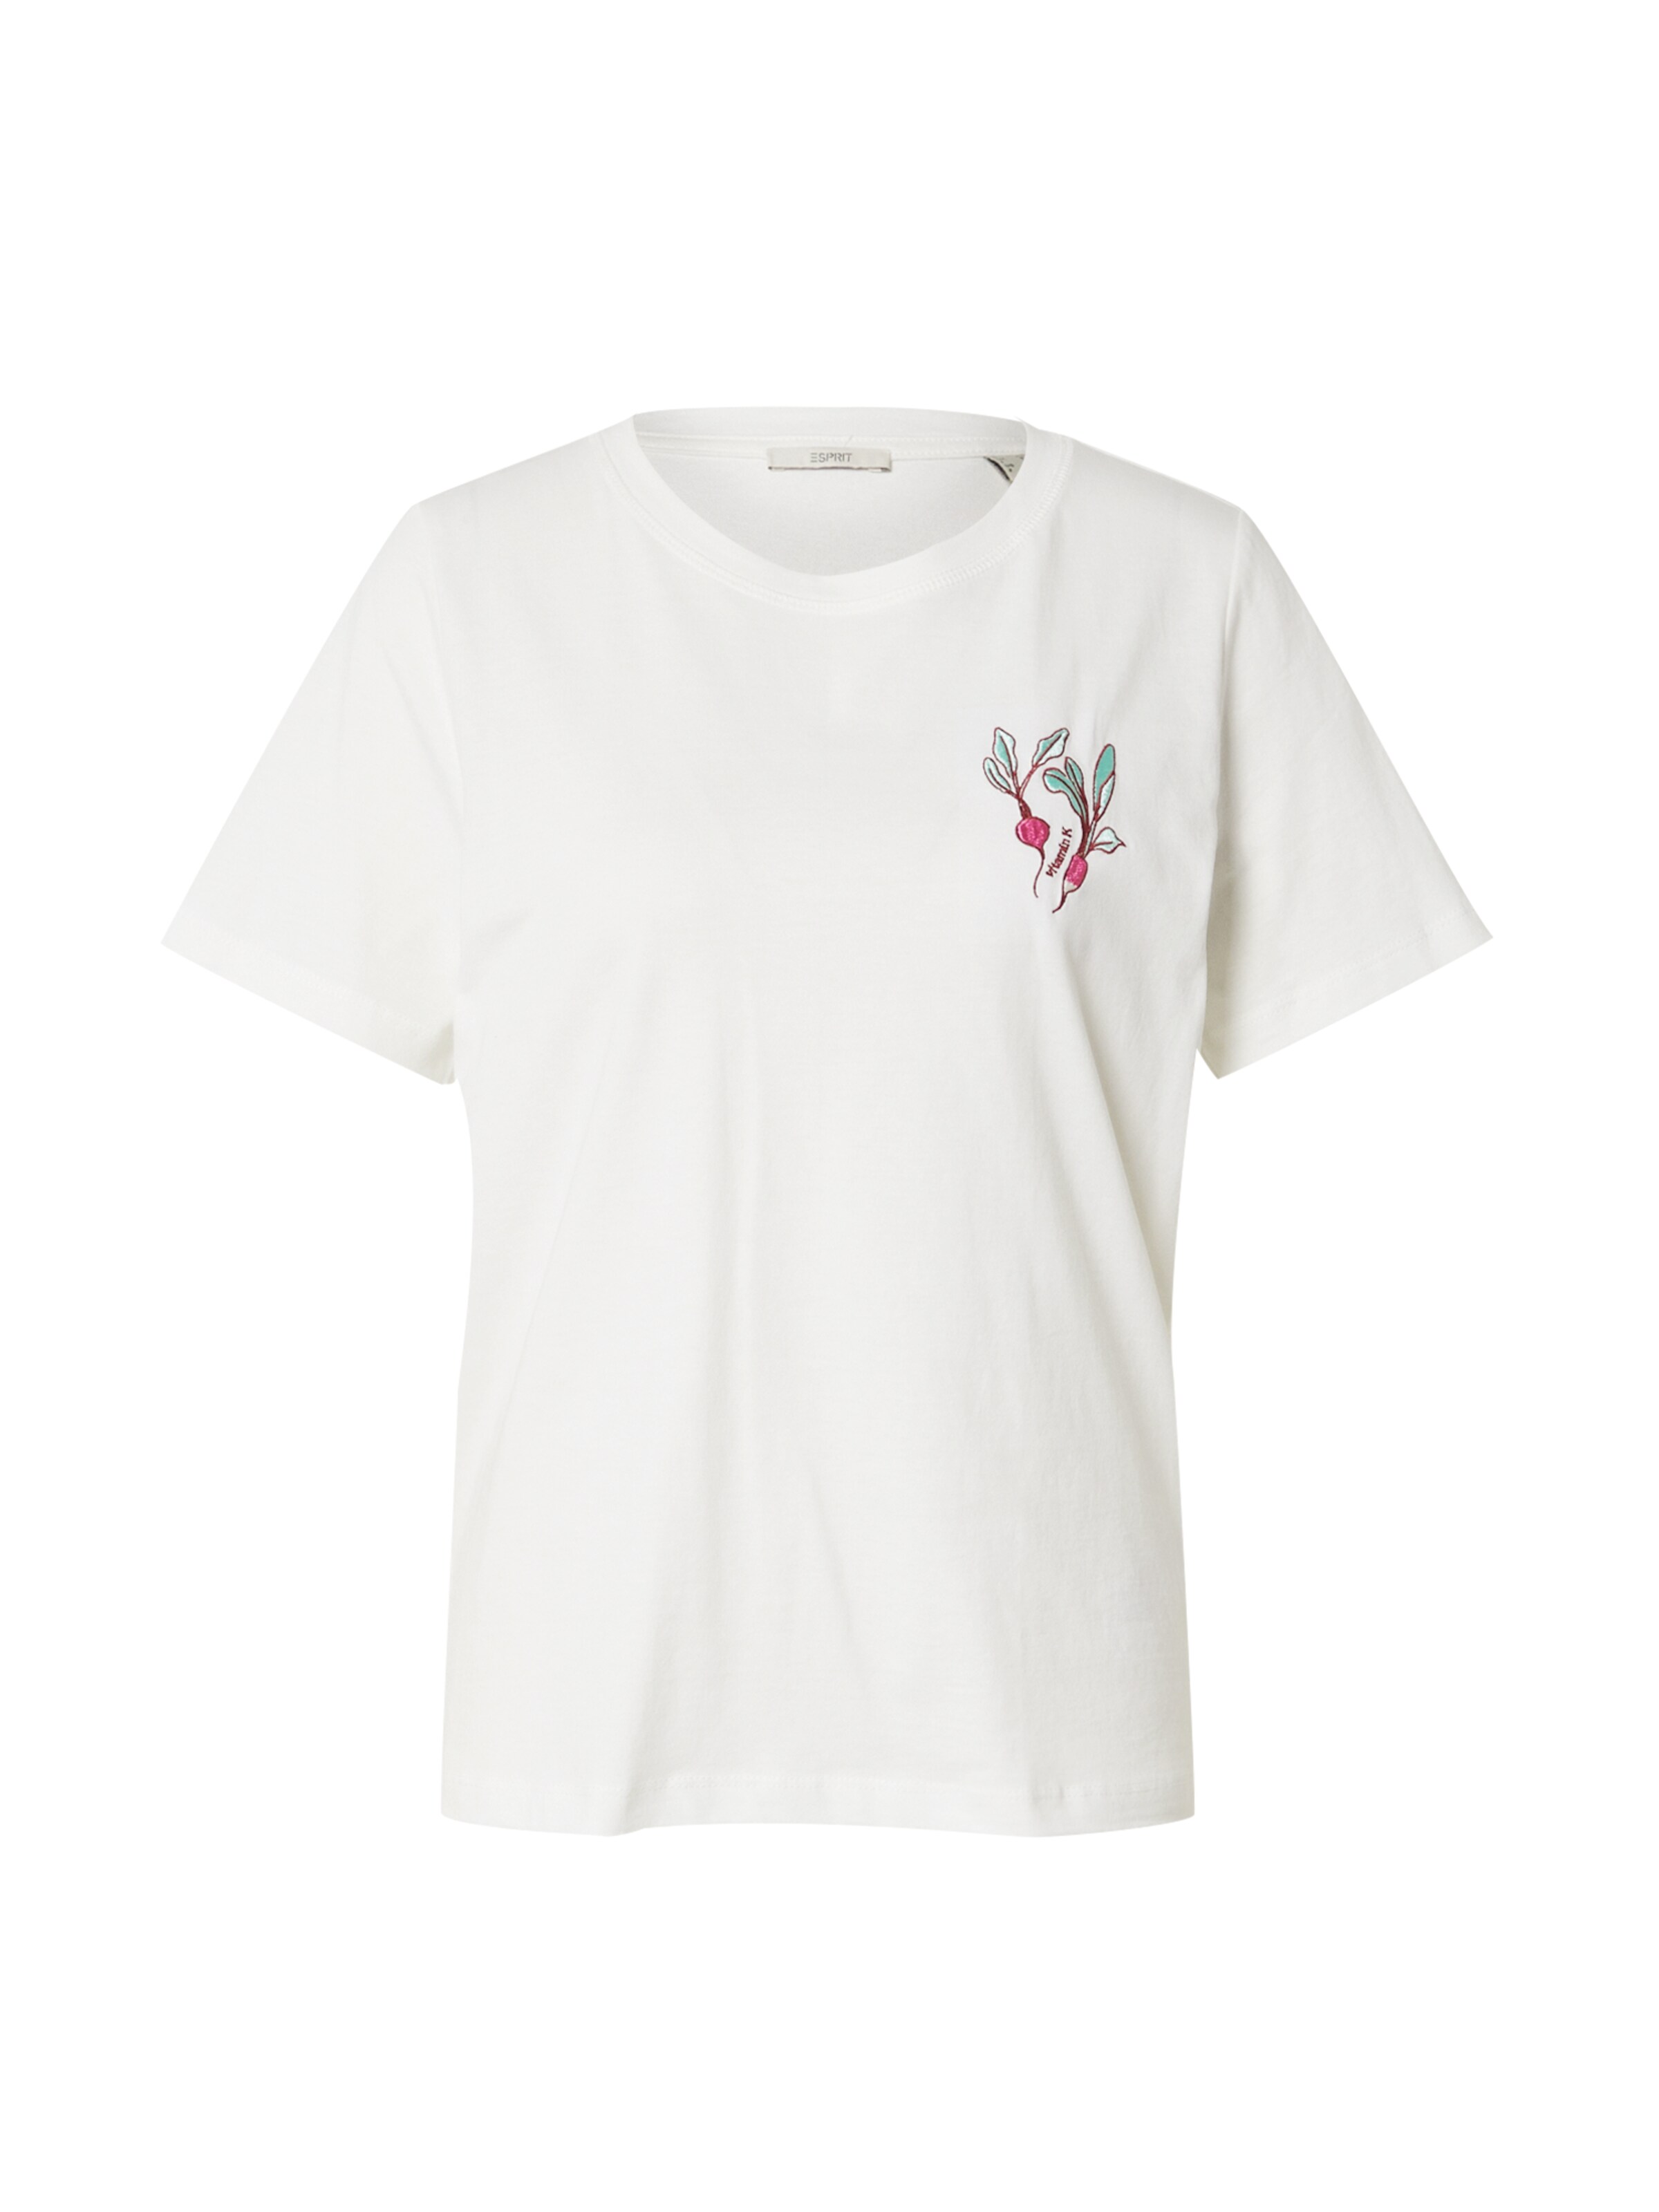 Maglia funzionale Mariposa ABOUT YOU Donna Abbigliamento Top e t-shirt T-shirt T-shirt senza maniche 